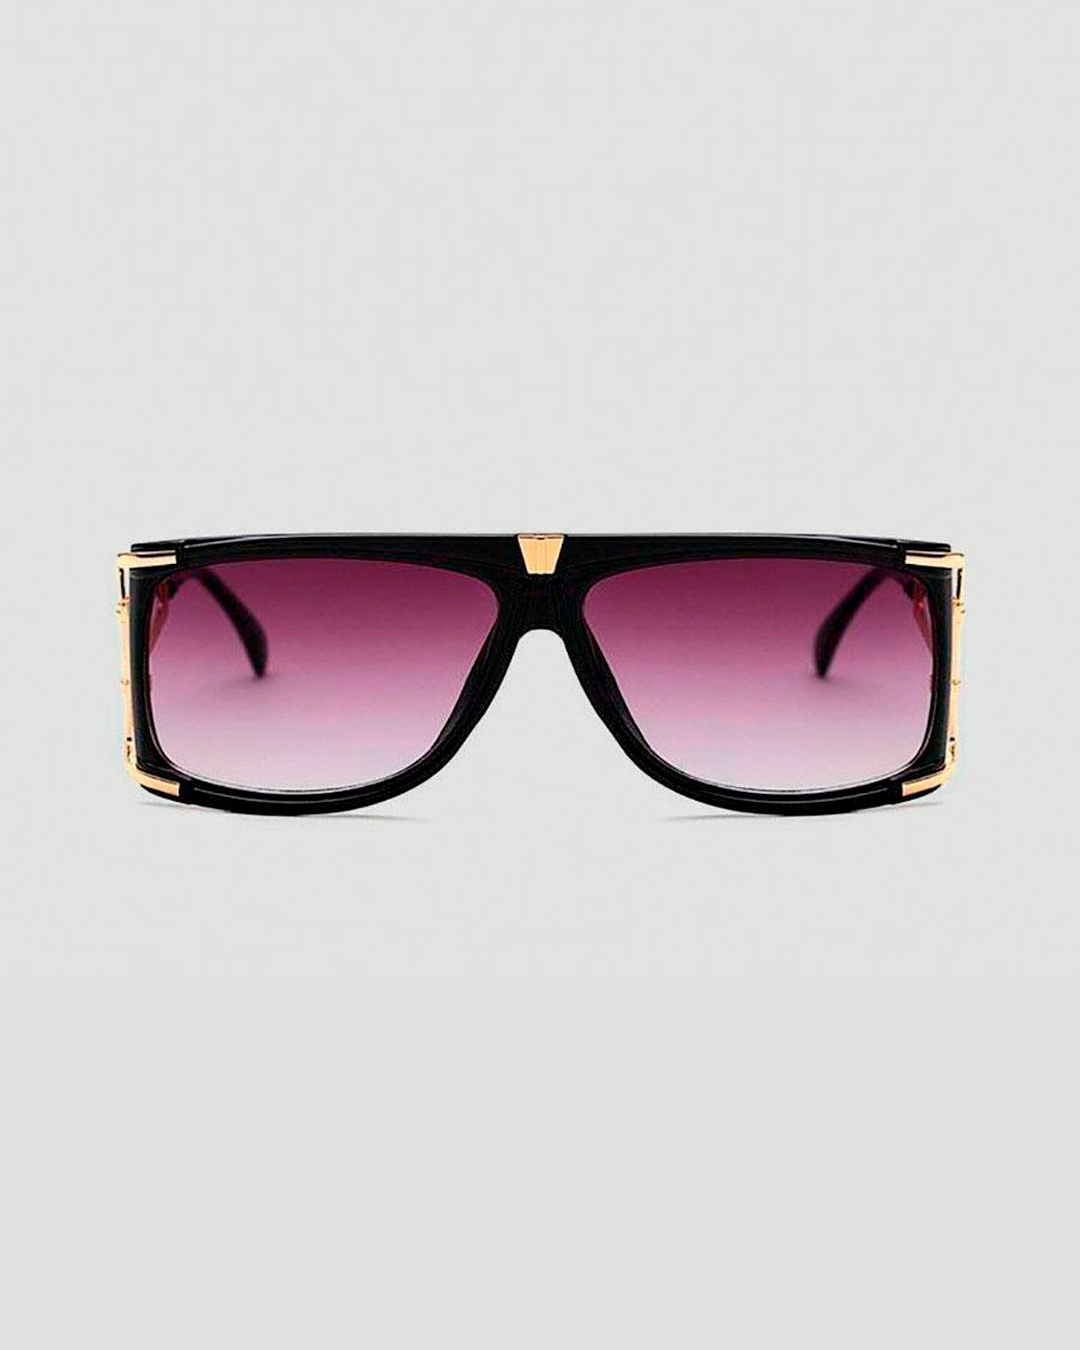 Jono Starsmore Sunglasses